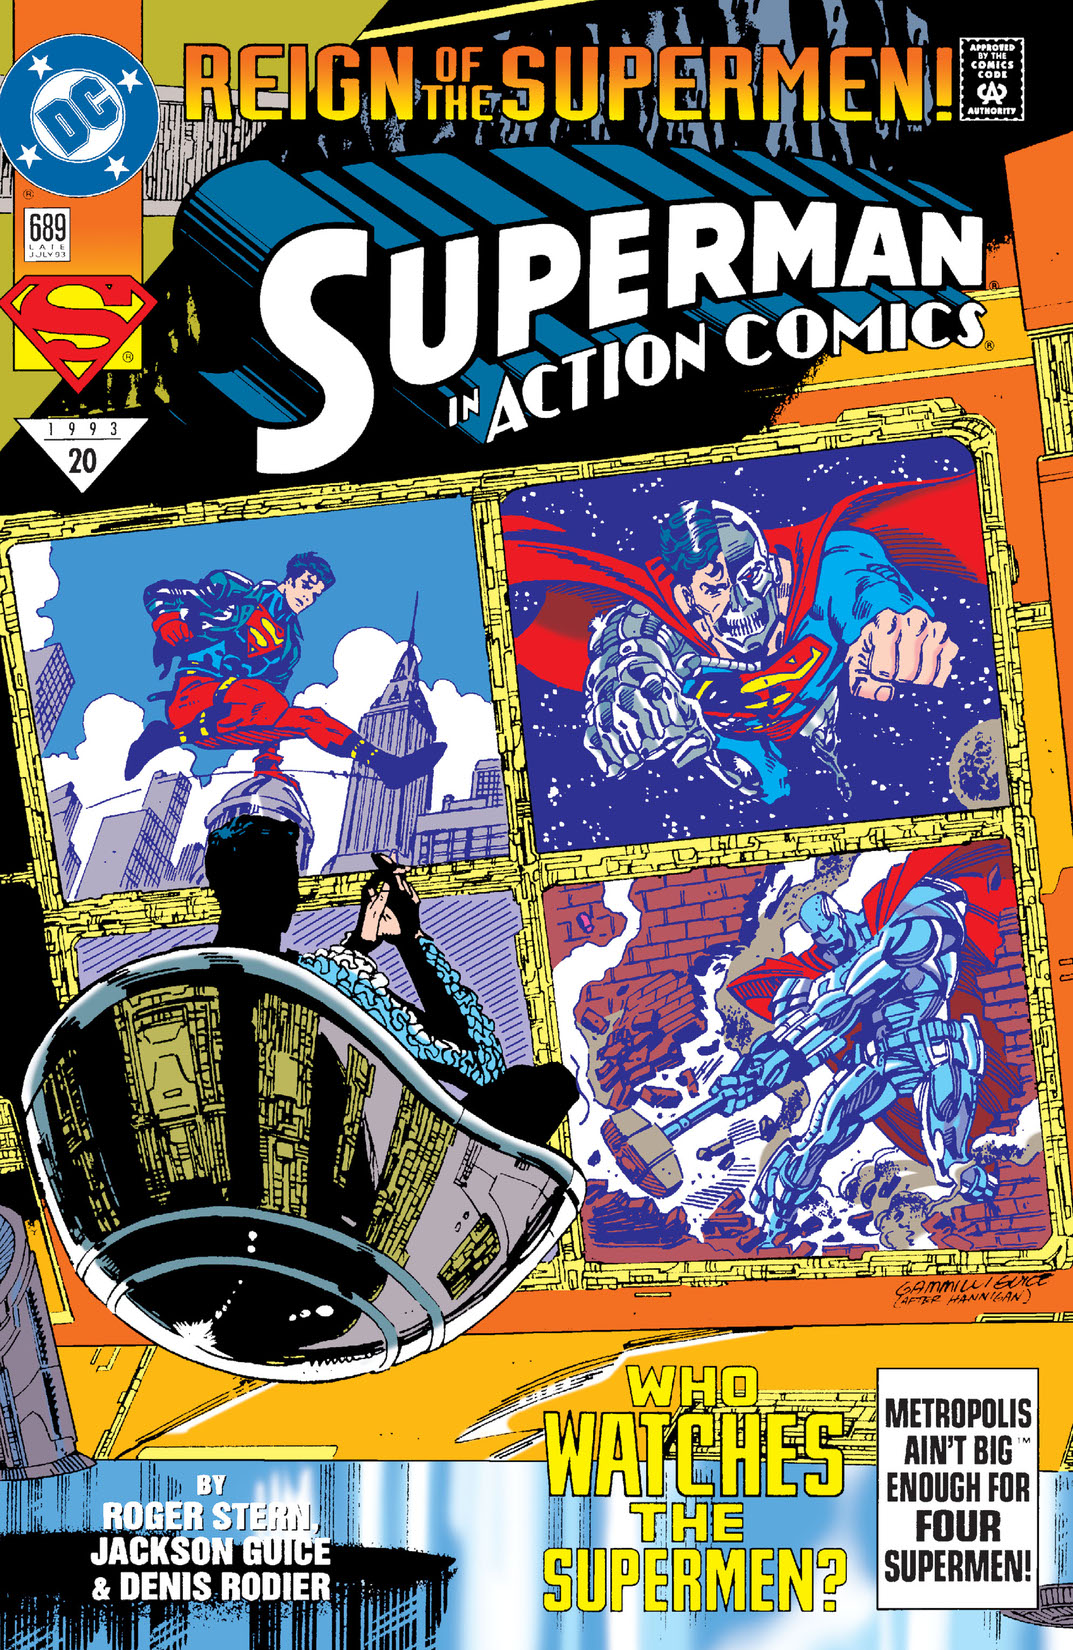 Action Comics (1938-) #689 preview images